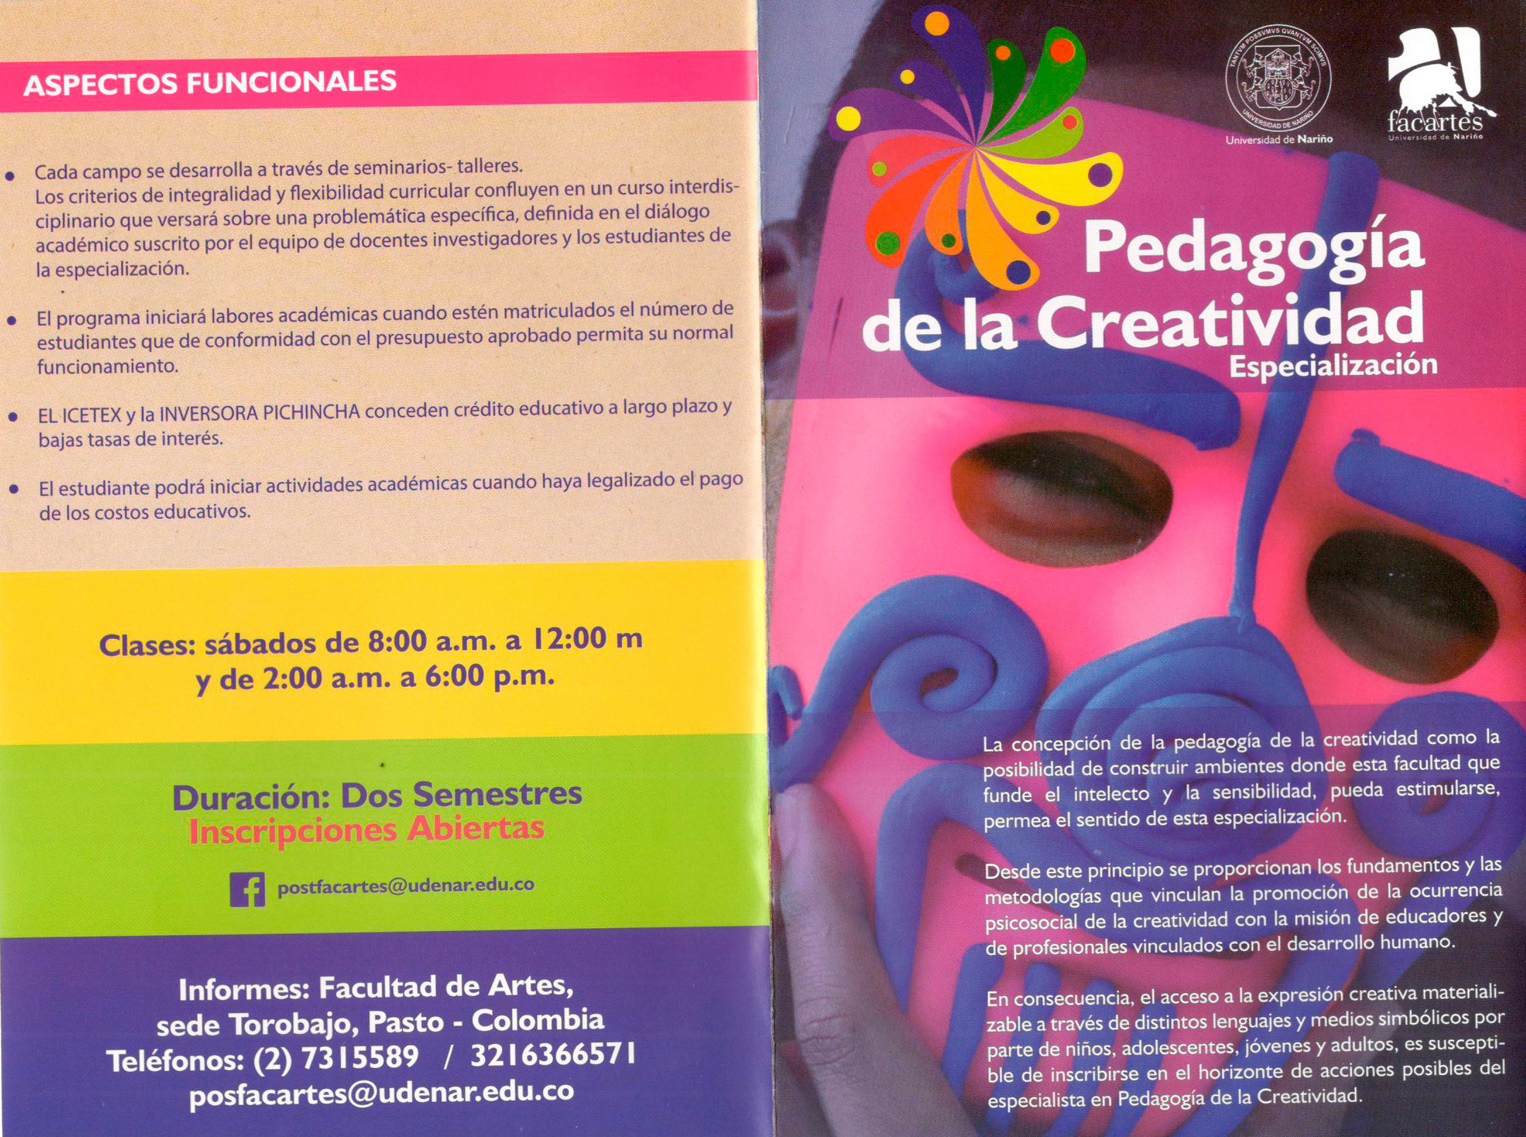 https://periodico.udenar.edu.co/wp-content/uploads/2019/01/pedagogia-de-la-creatividad-udenar-periodico.jpg